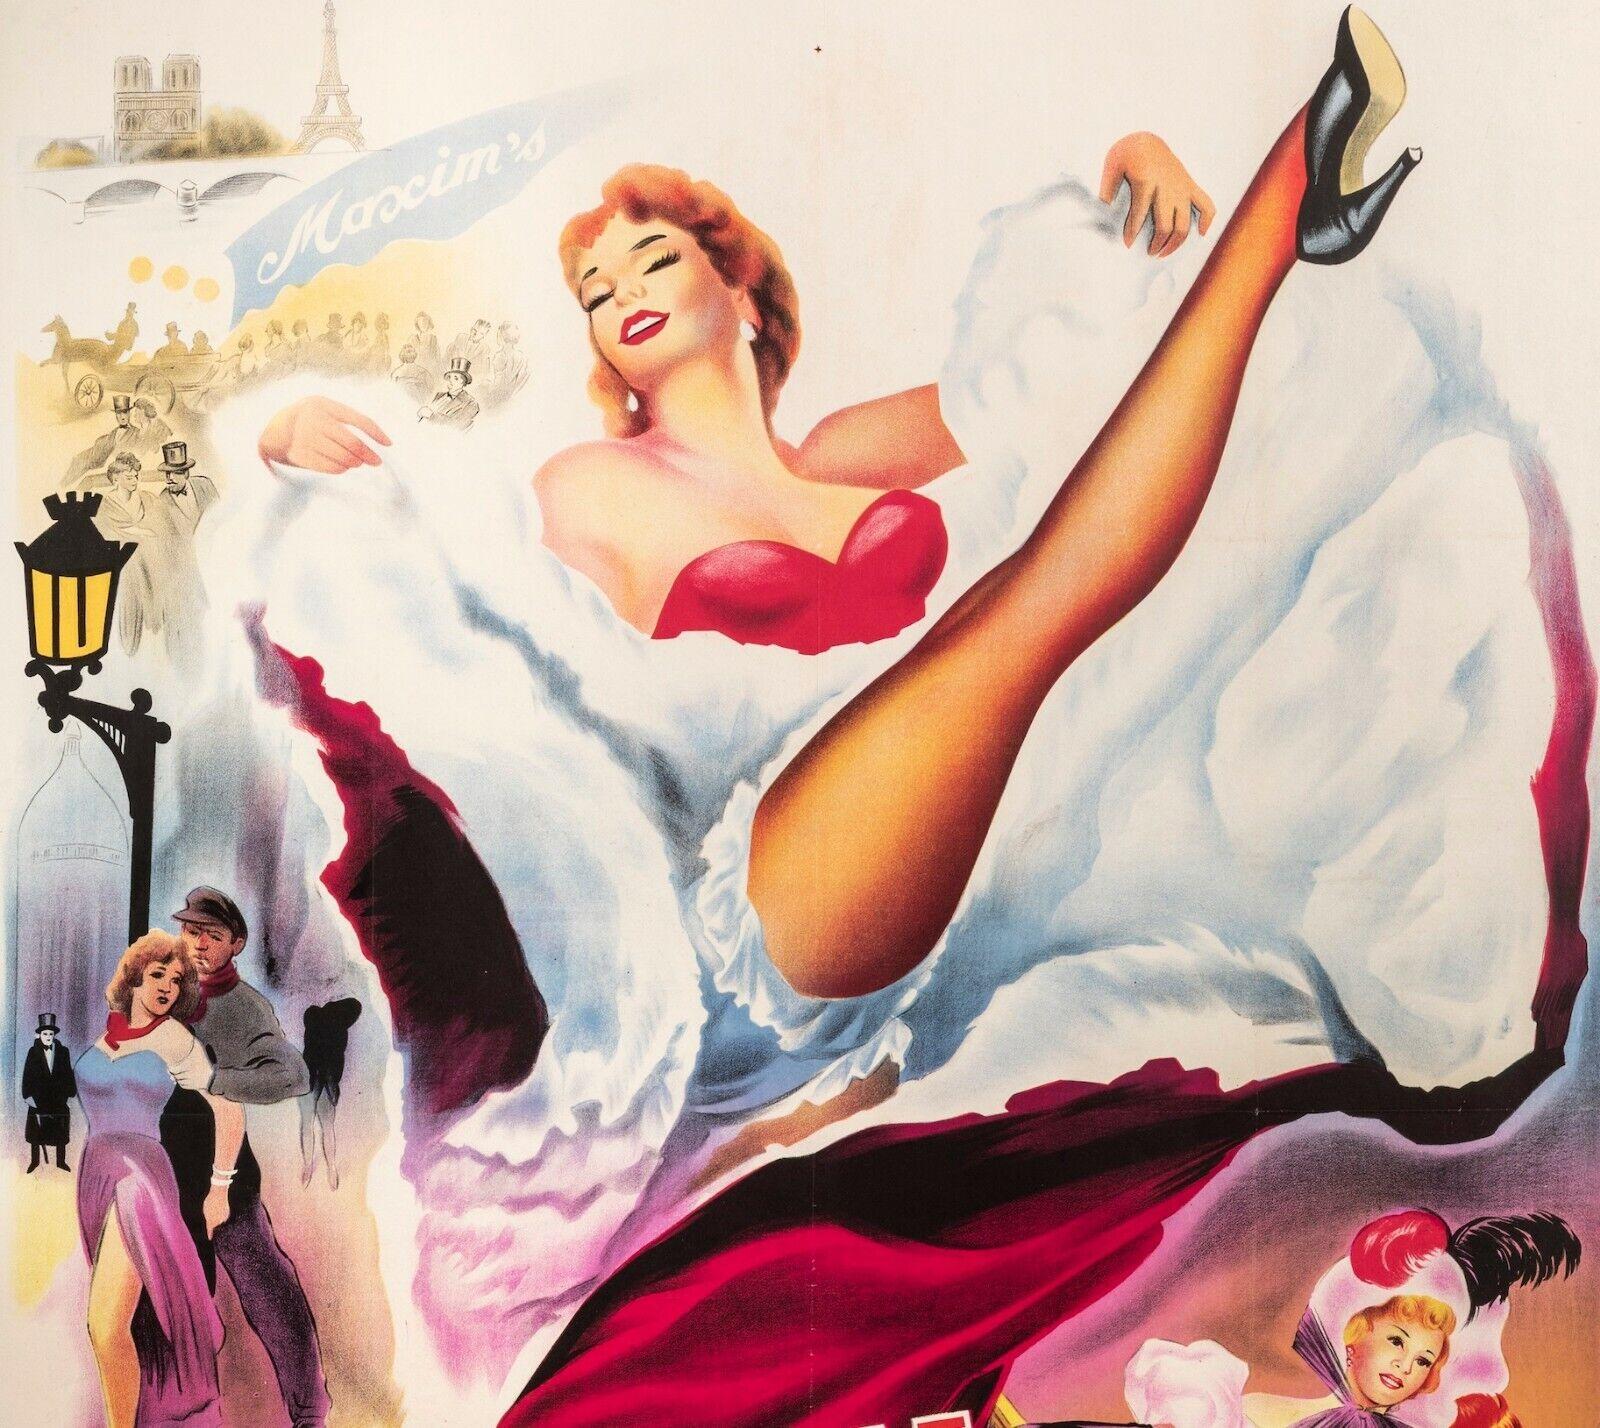 Original Poster-Moulin Rouge-Toulouse Lautrec-La Goulue Jane April, 1952

Poster for John Huston's Moulin-Rouge movie, released in 1952.
The film tells the story of Henri de Toulouse-Lautrec.

Additional Details:
Materials and Techniques: